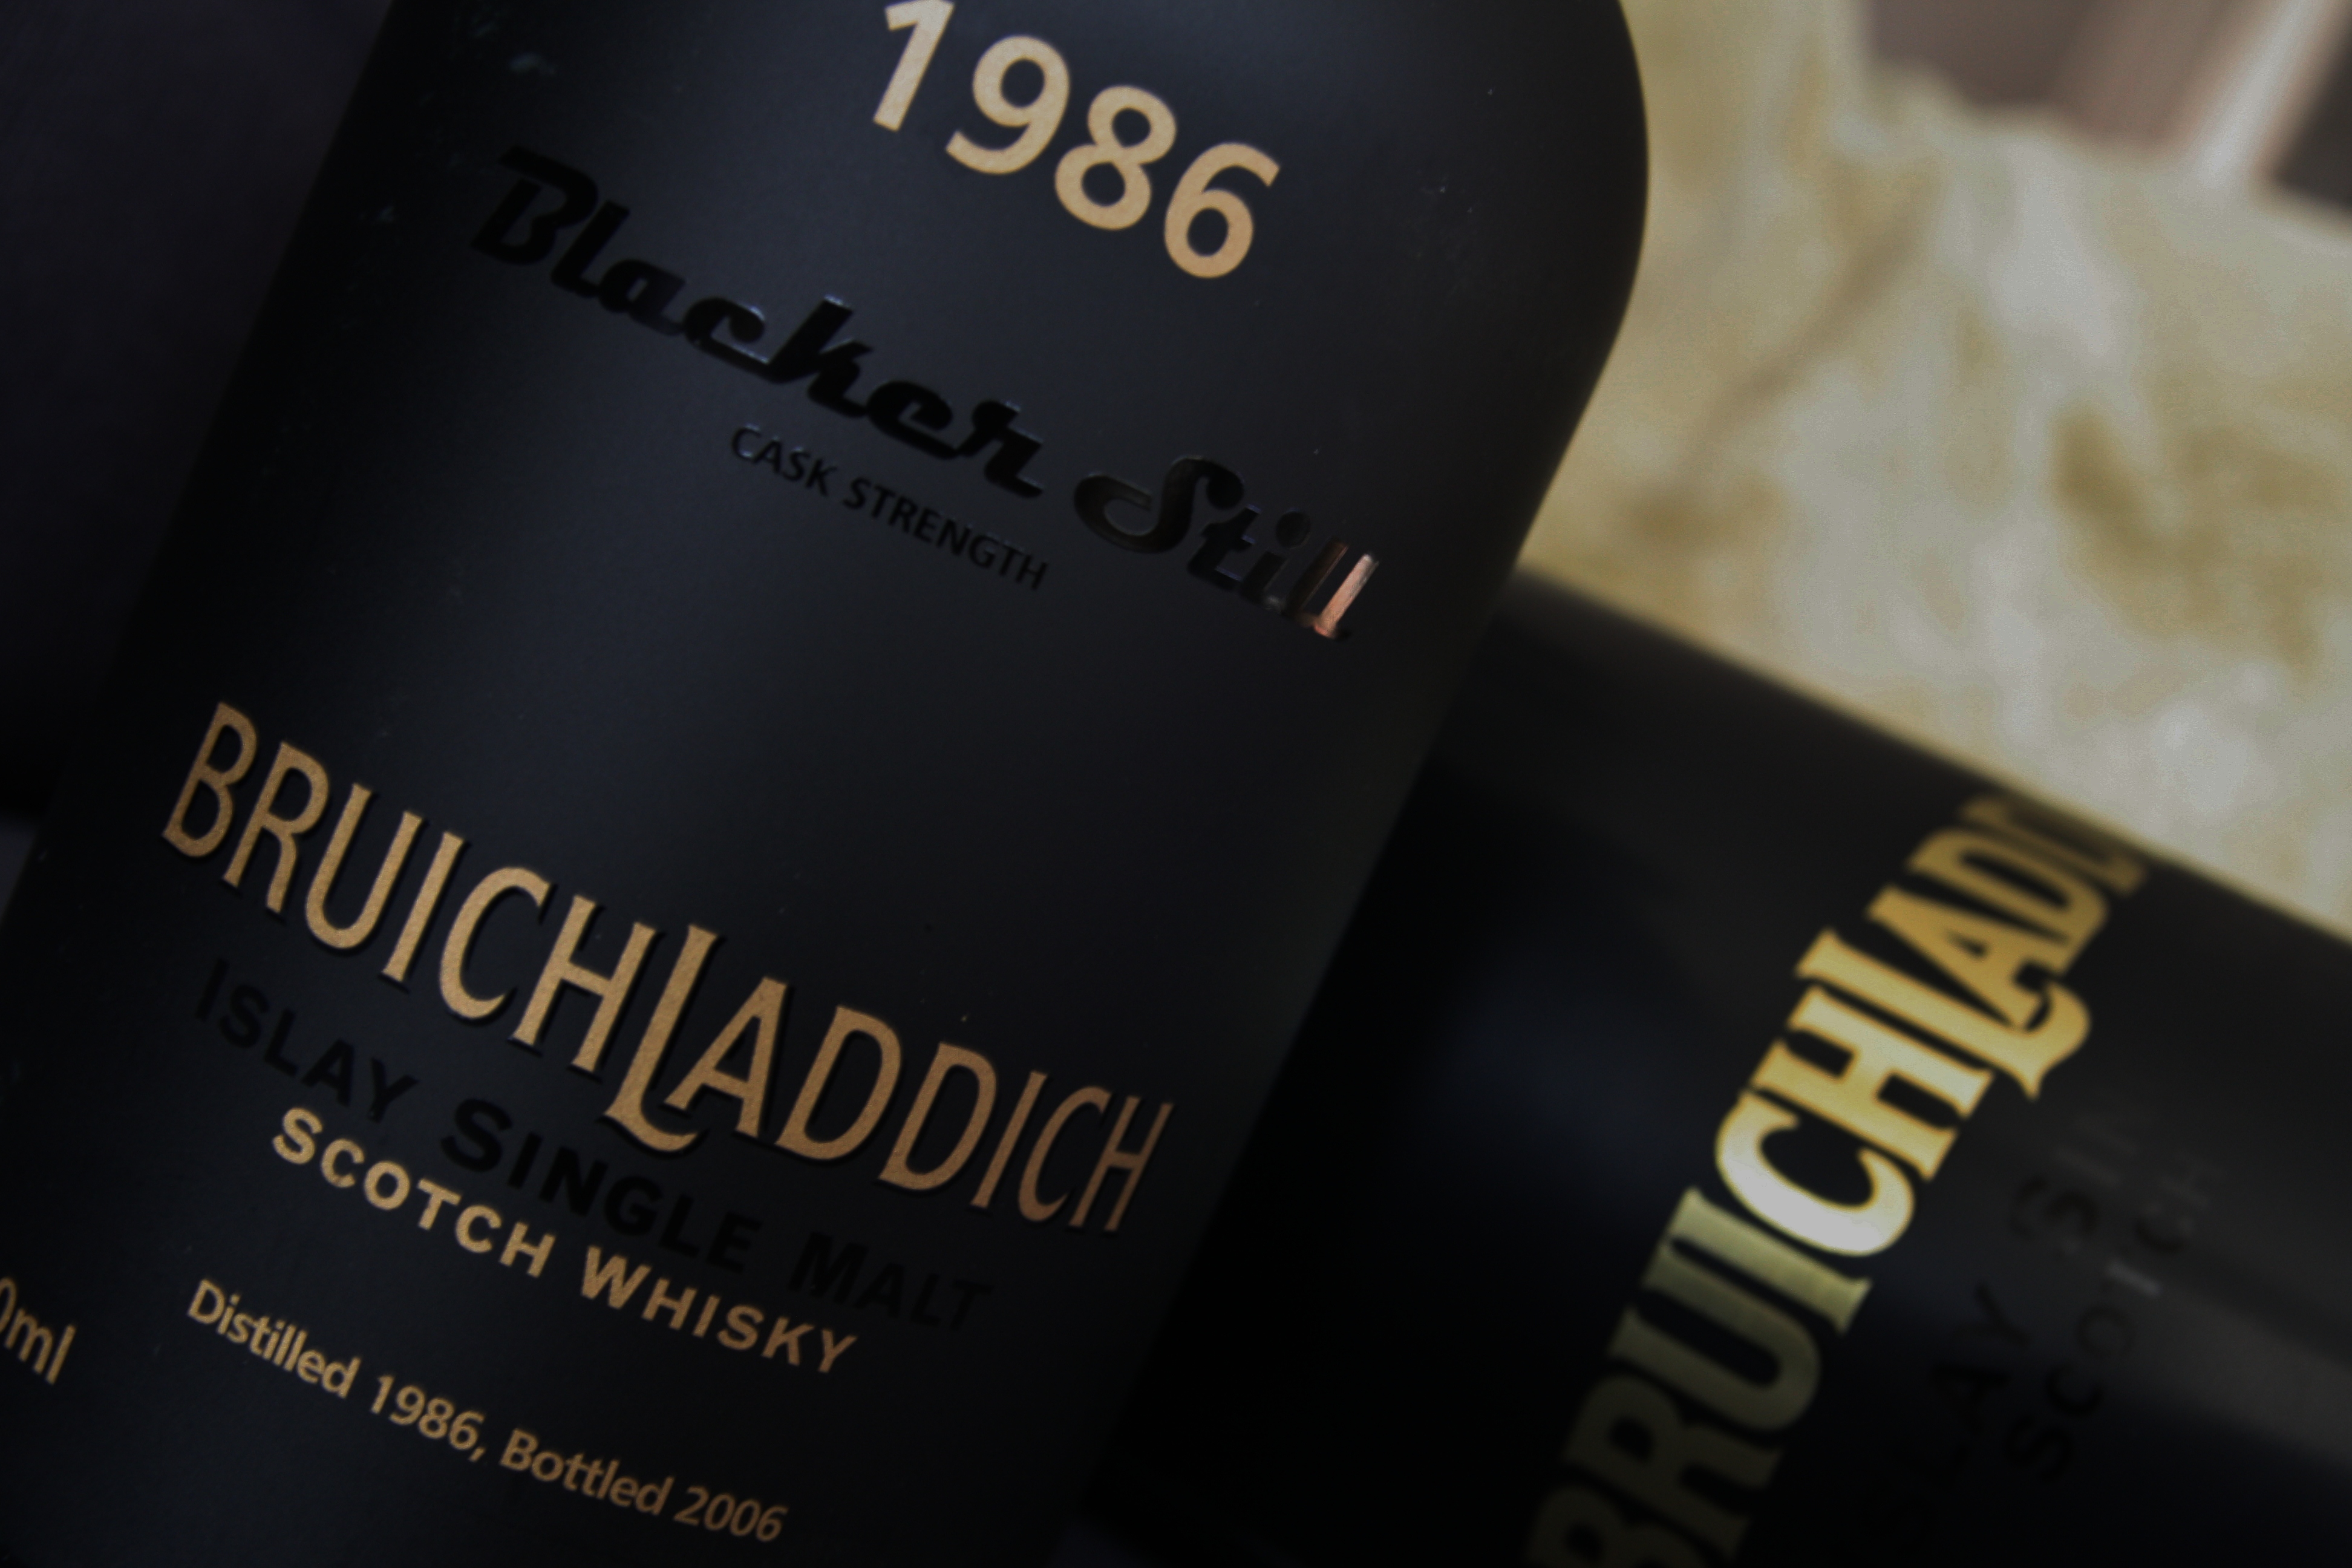 Bruichladdich Malt Scotch Single Whisky 3888x2592